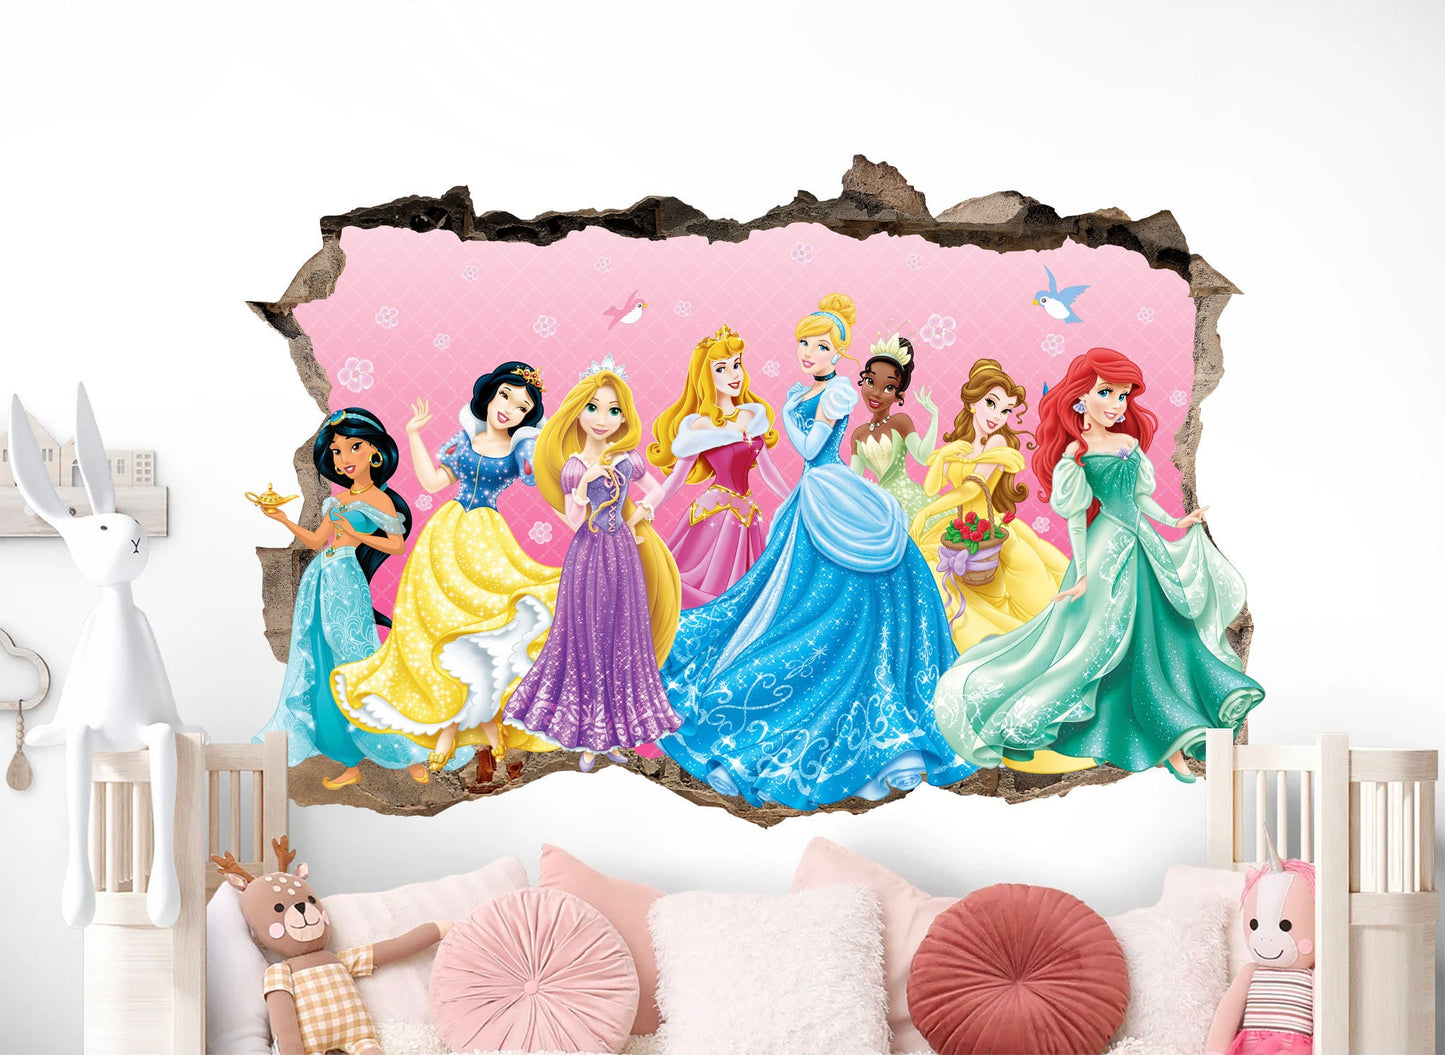 Enchanted Princesses: 3D Wall Decal with Beautiful Broken Wall Backdrop - BR339